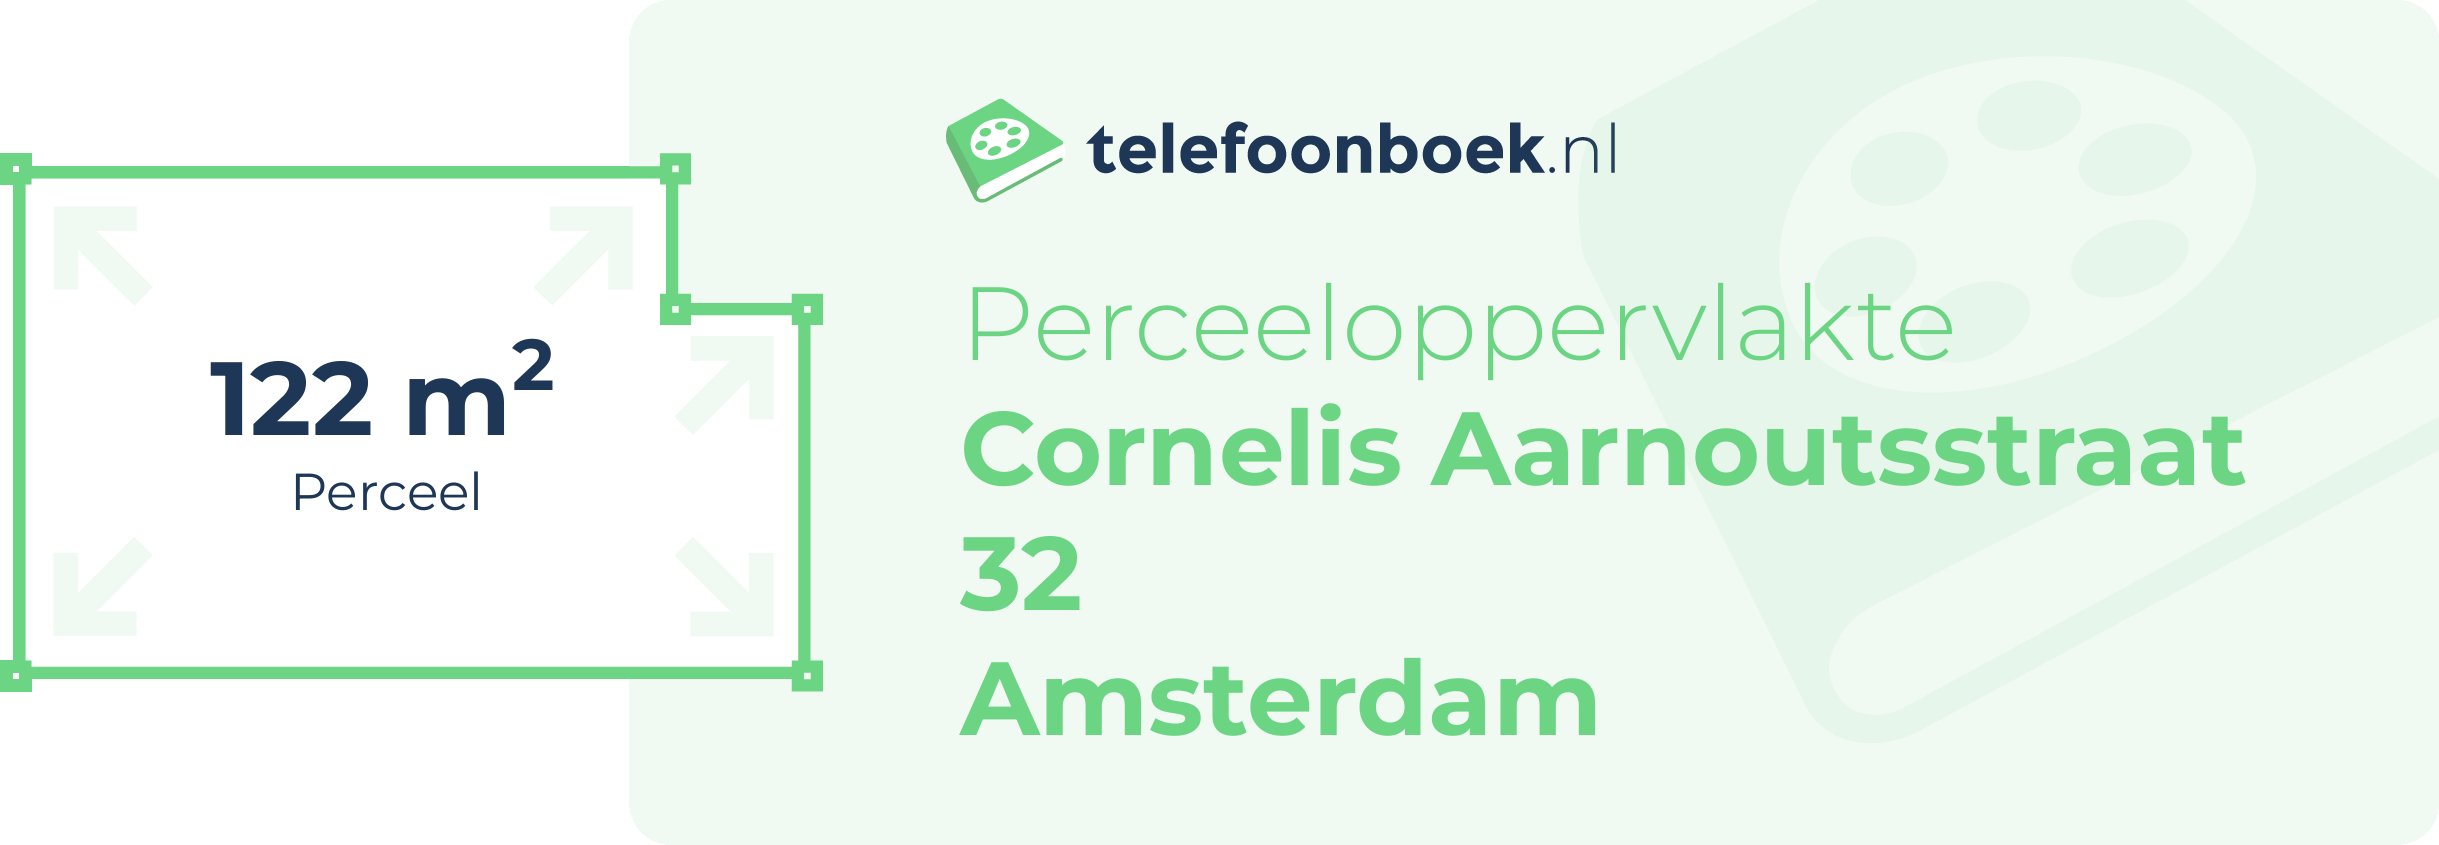 Perceeloppervlakte Cornelis Aarnoutsstraat 32 Amsterdam